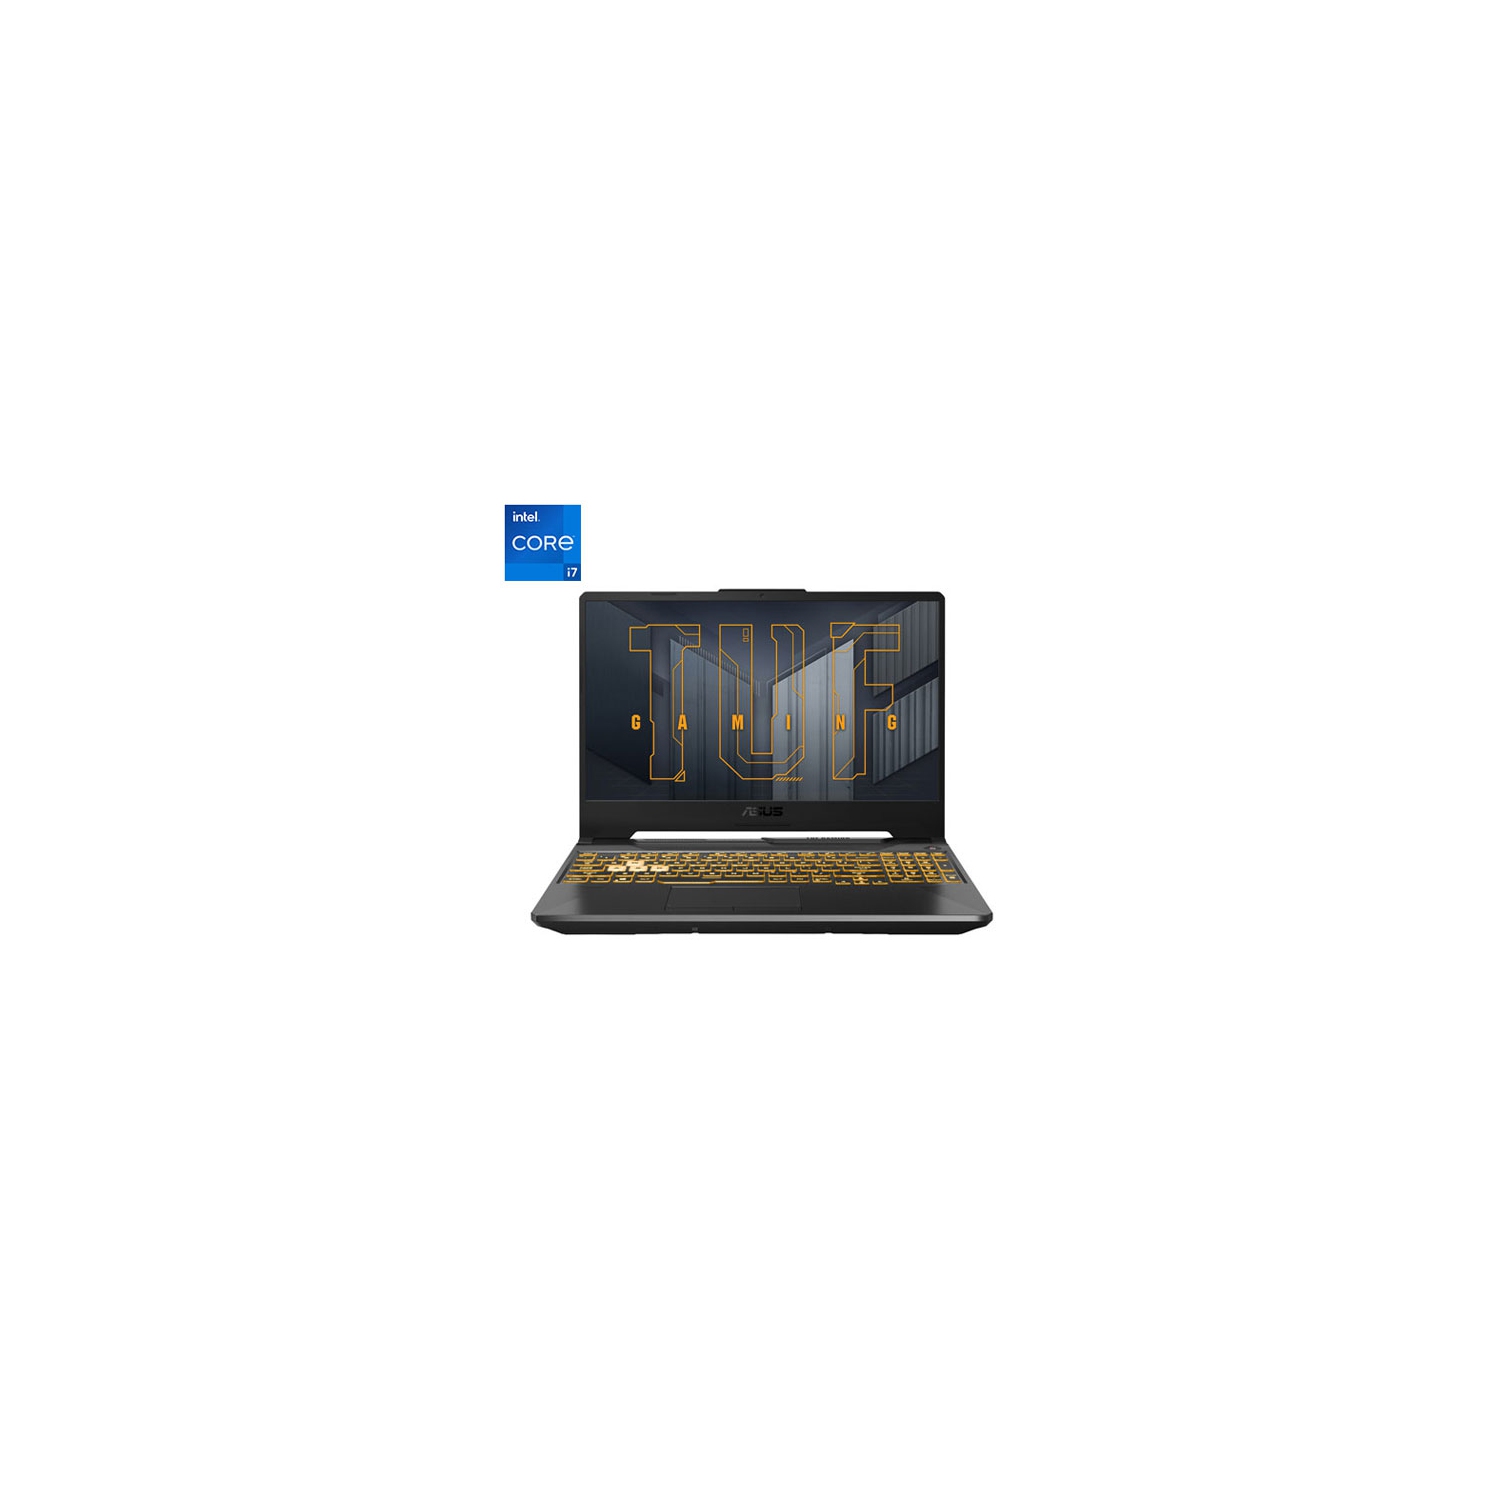 Open Box - ASUS TUF F15 15.6" Gaming Laptop - Grey (Intel Core i7-11800H/512GB SSD/16GB RAM/RTX 3060/Win10)